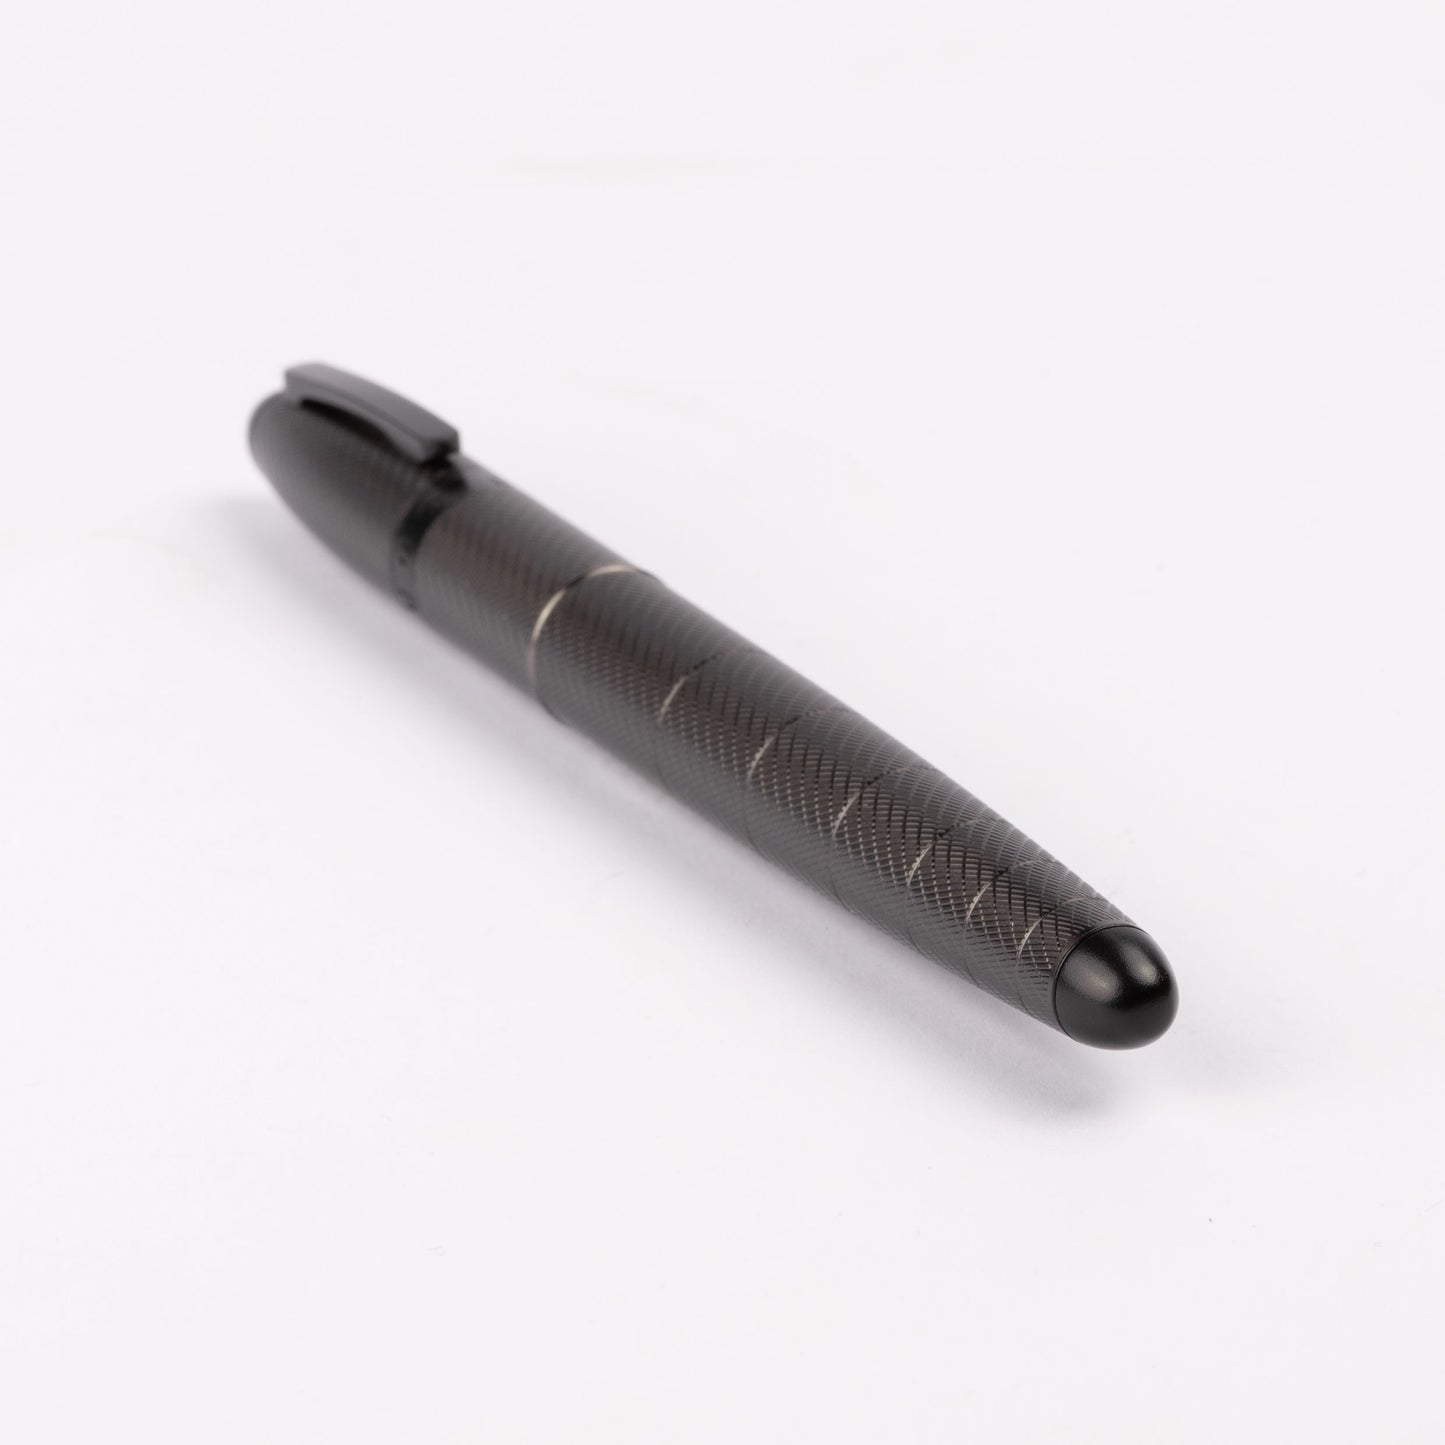 Hugo Boss - Fountain Pen Oval Gun - Product Code: HSF1562D